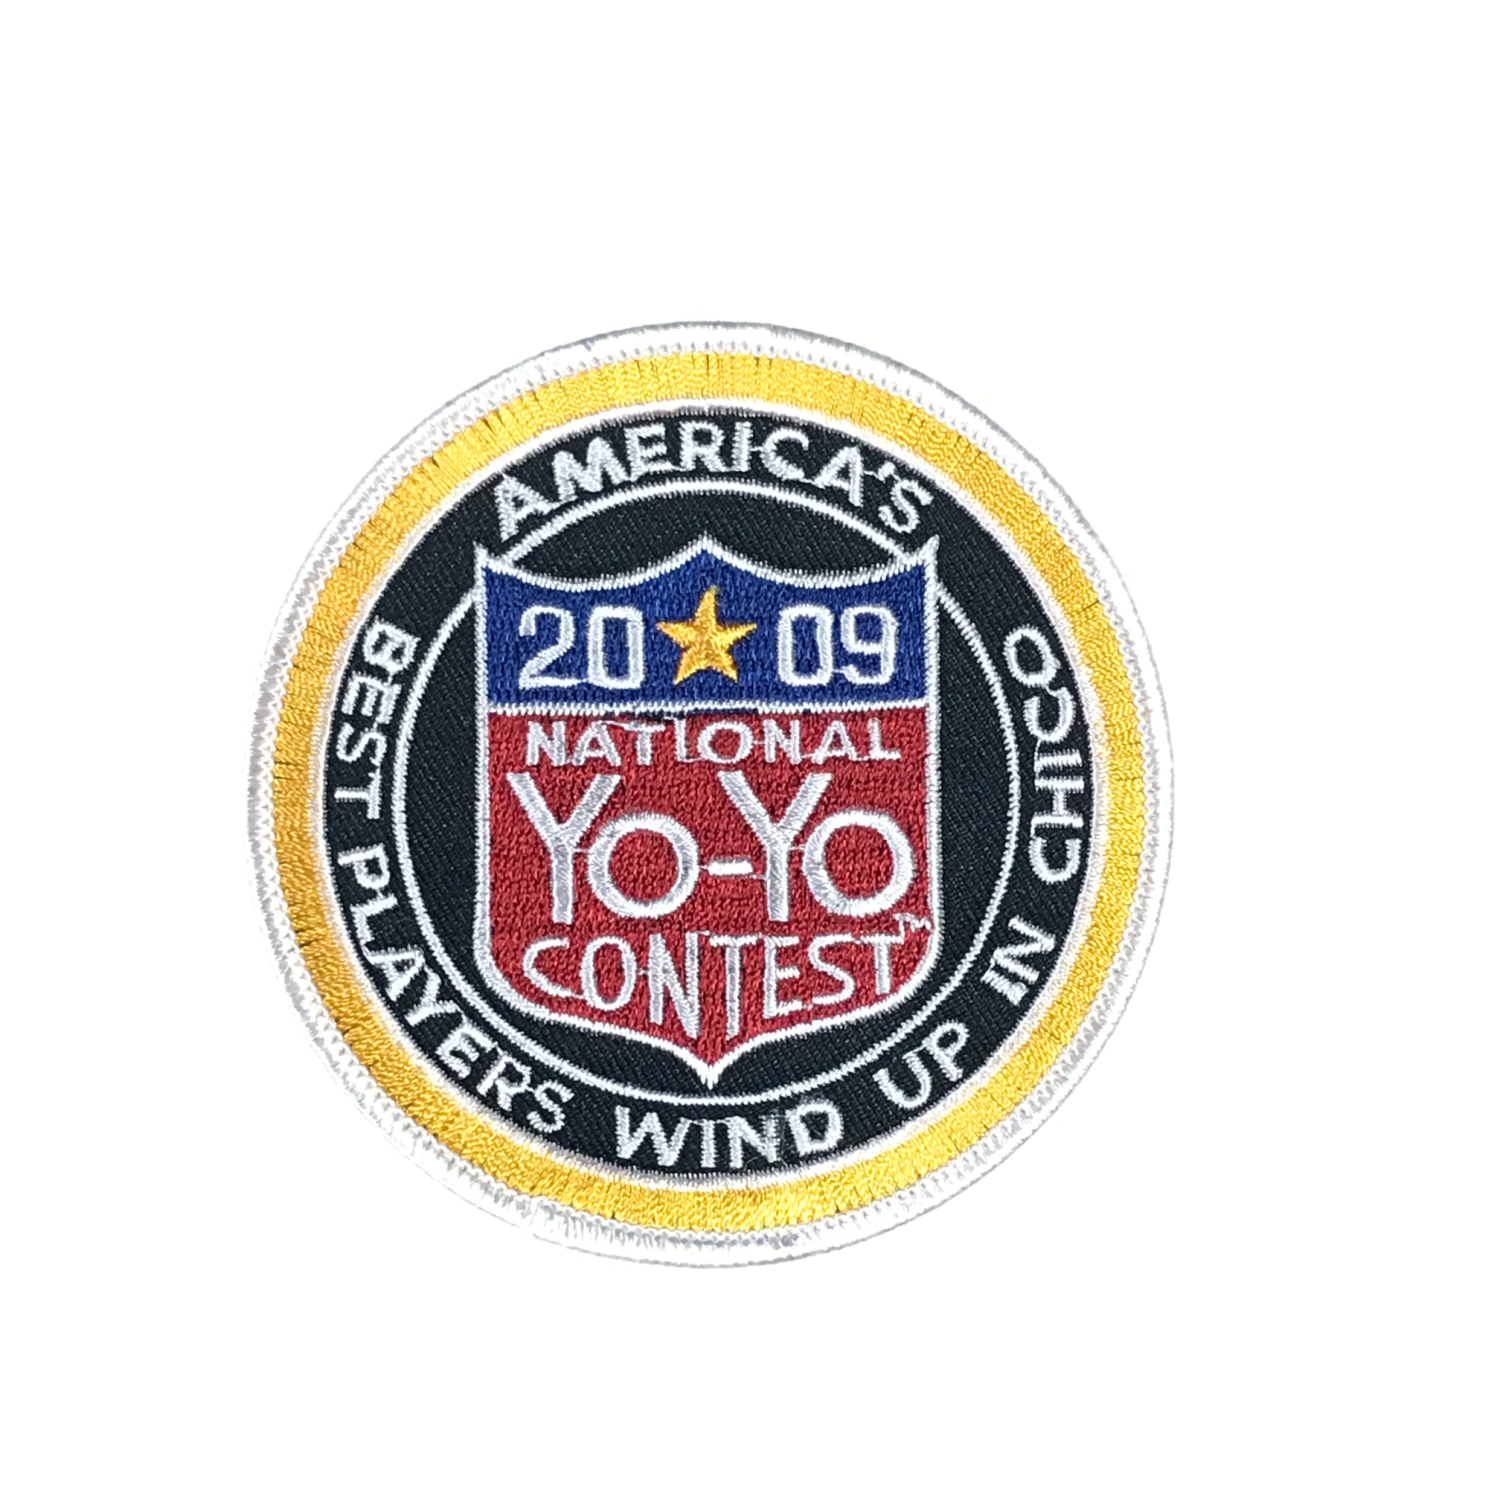 National Yo-Yo Contest Patch 3 or 4 inch 2009   3261088.17